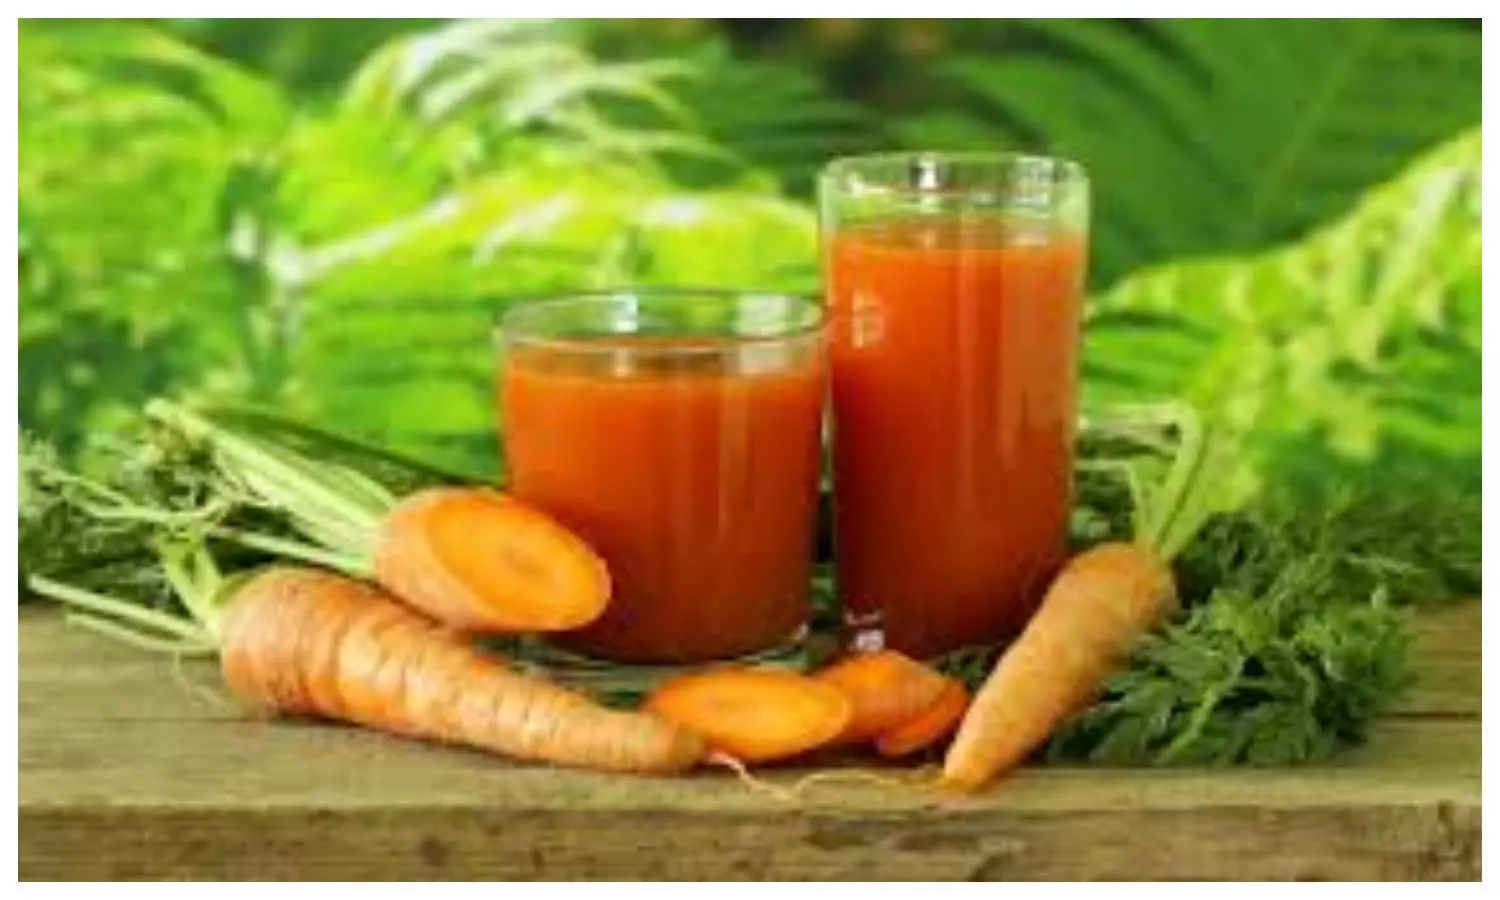 Carrot Health Benefits